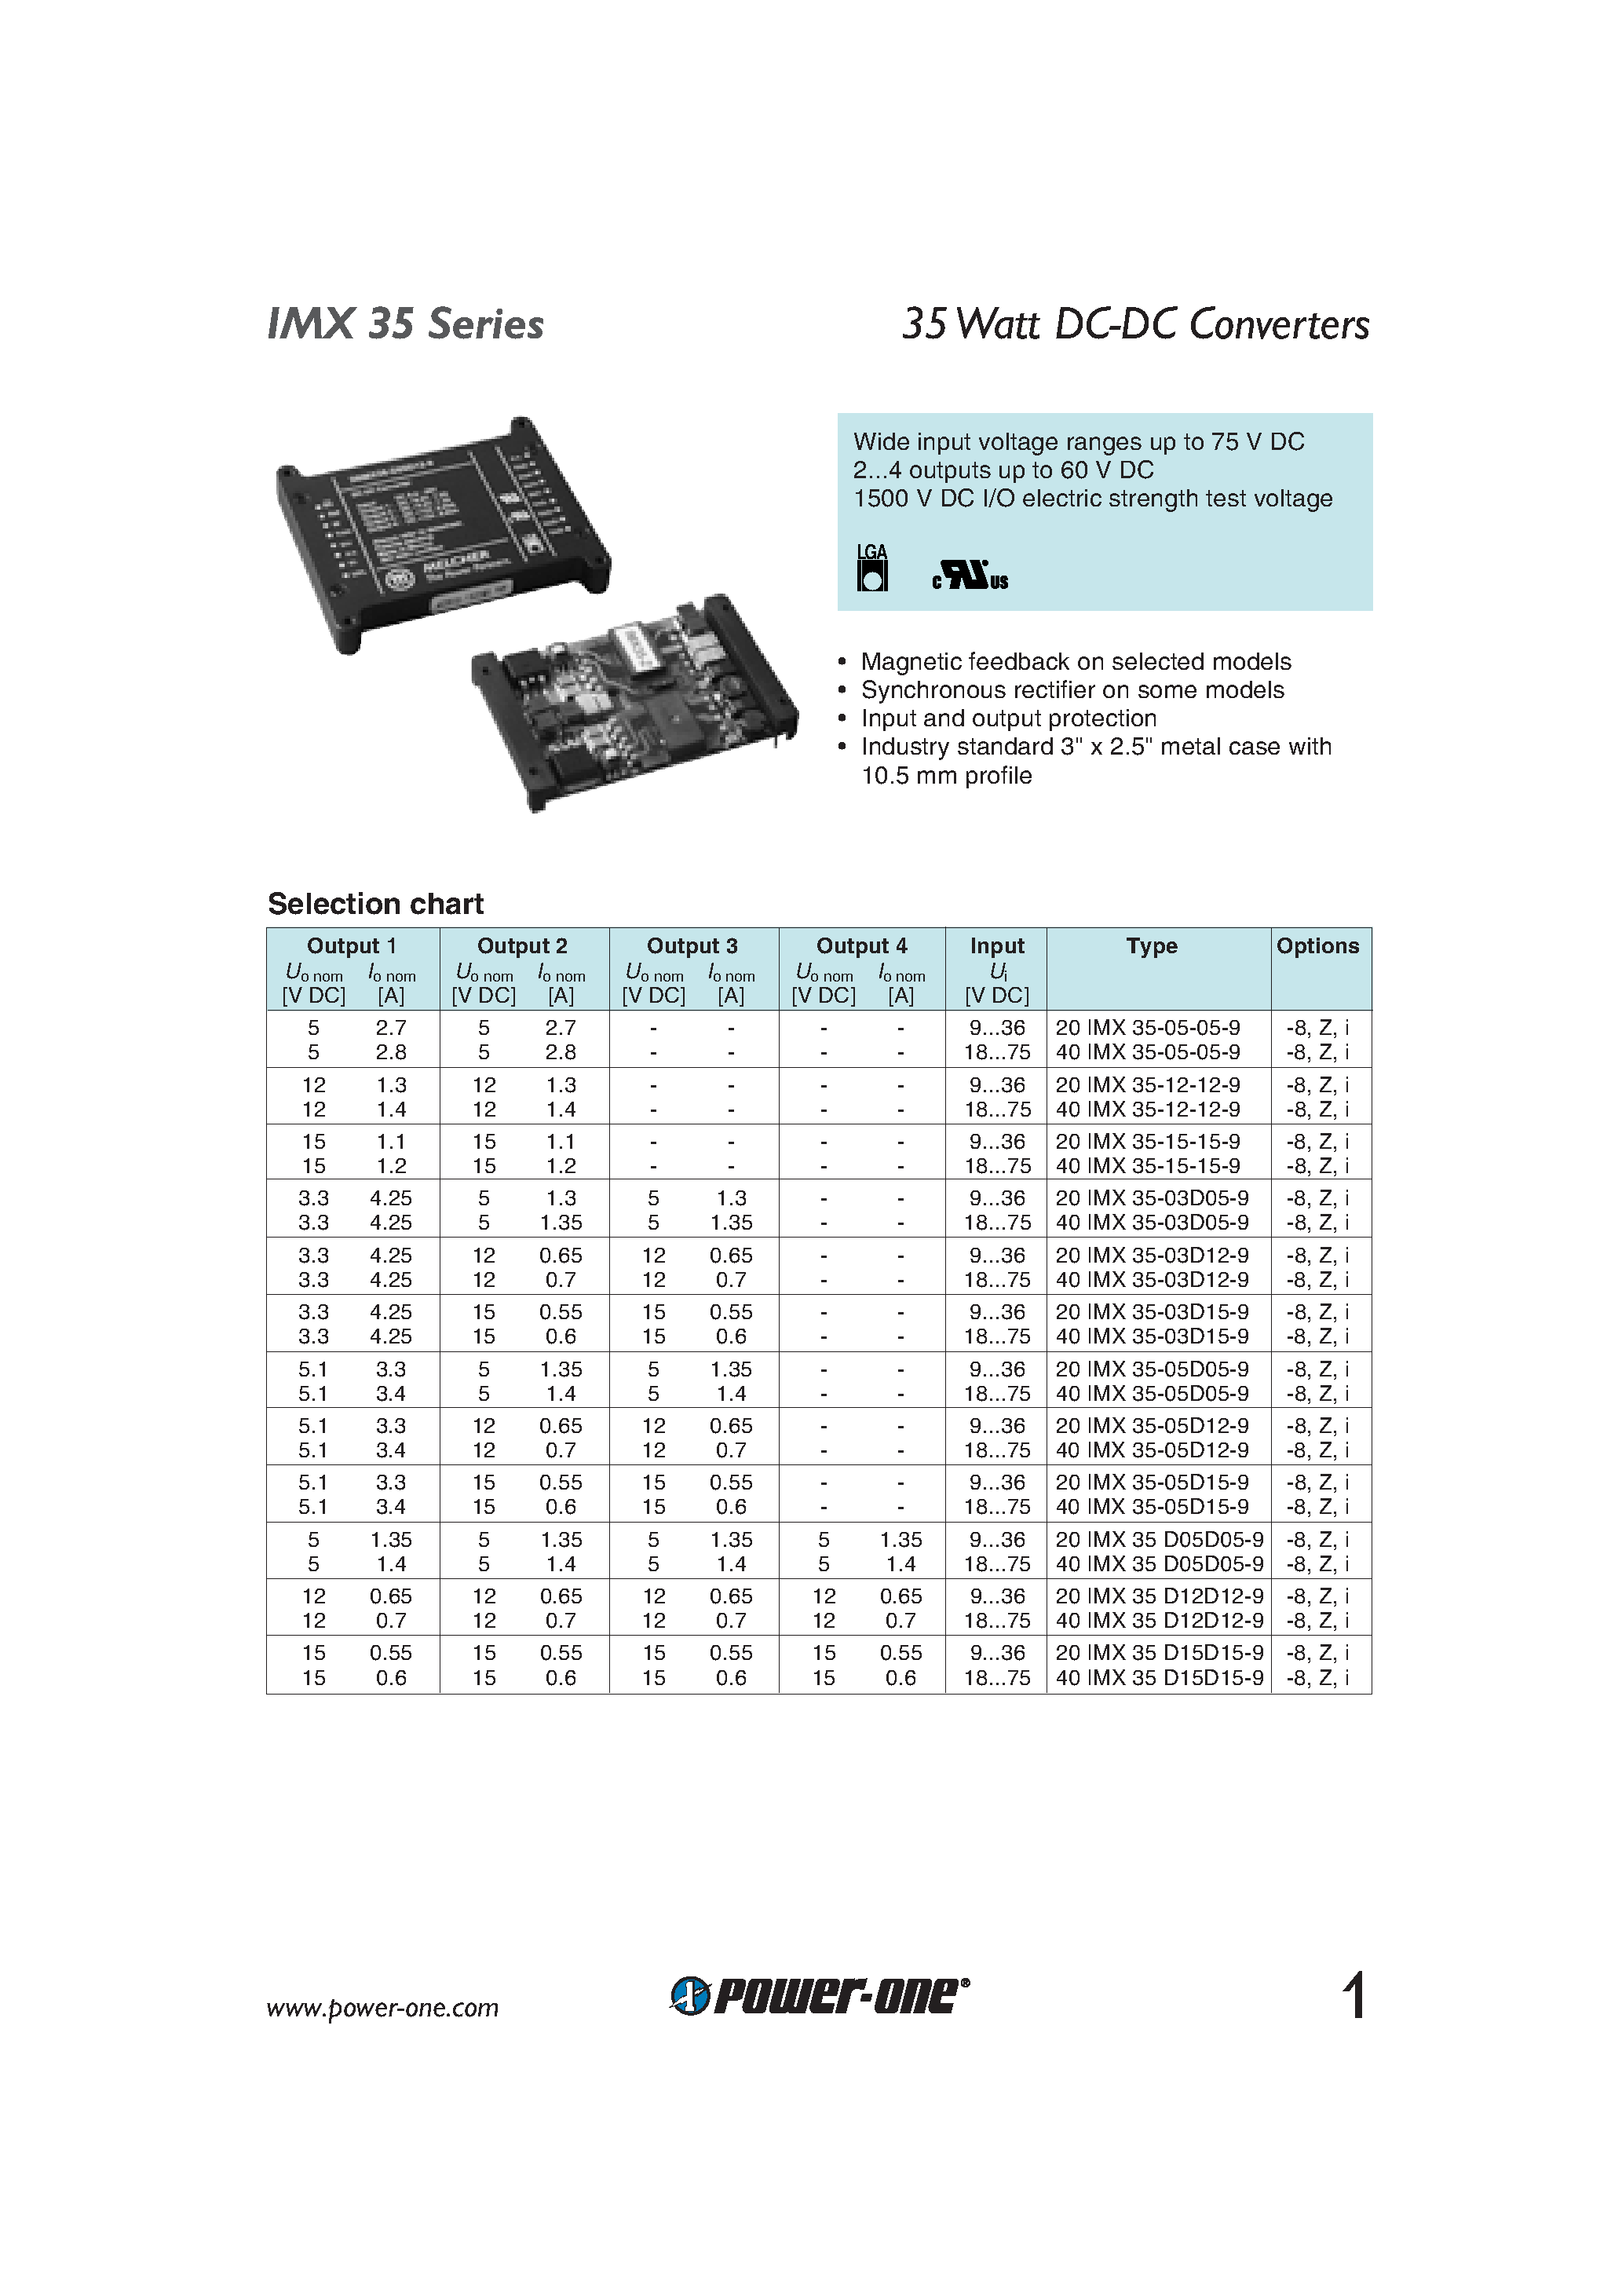 Datasheet 40IMX35-05D15-9 - 35 Watt DC-DC Converters page 1